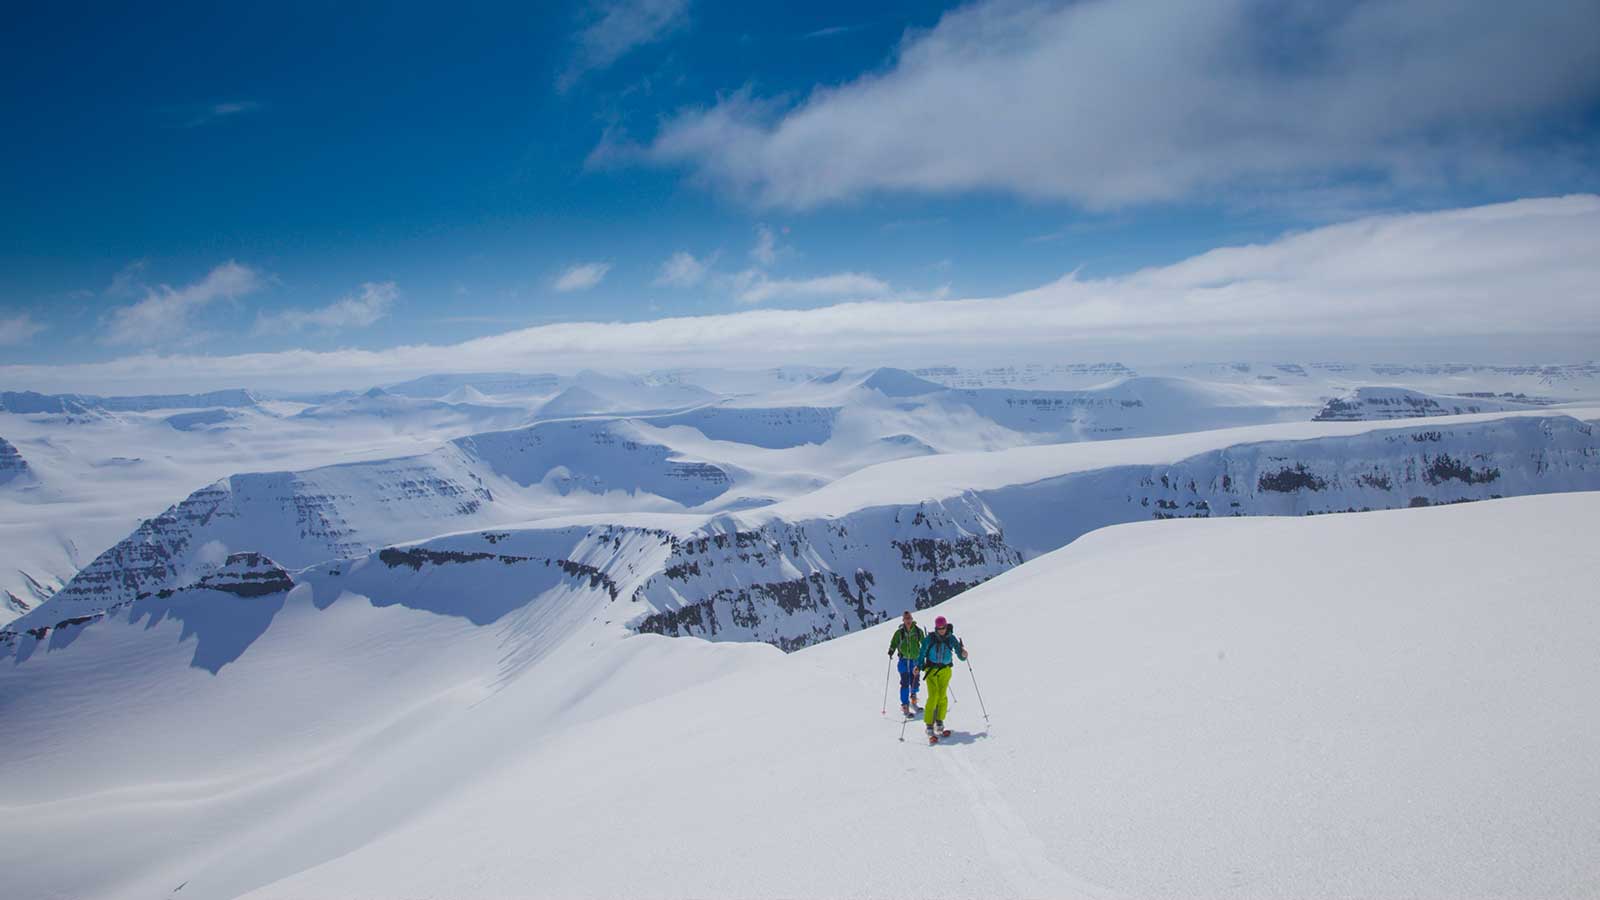 Ski touring on Troll Peninsula, Iceland